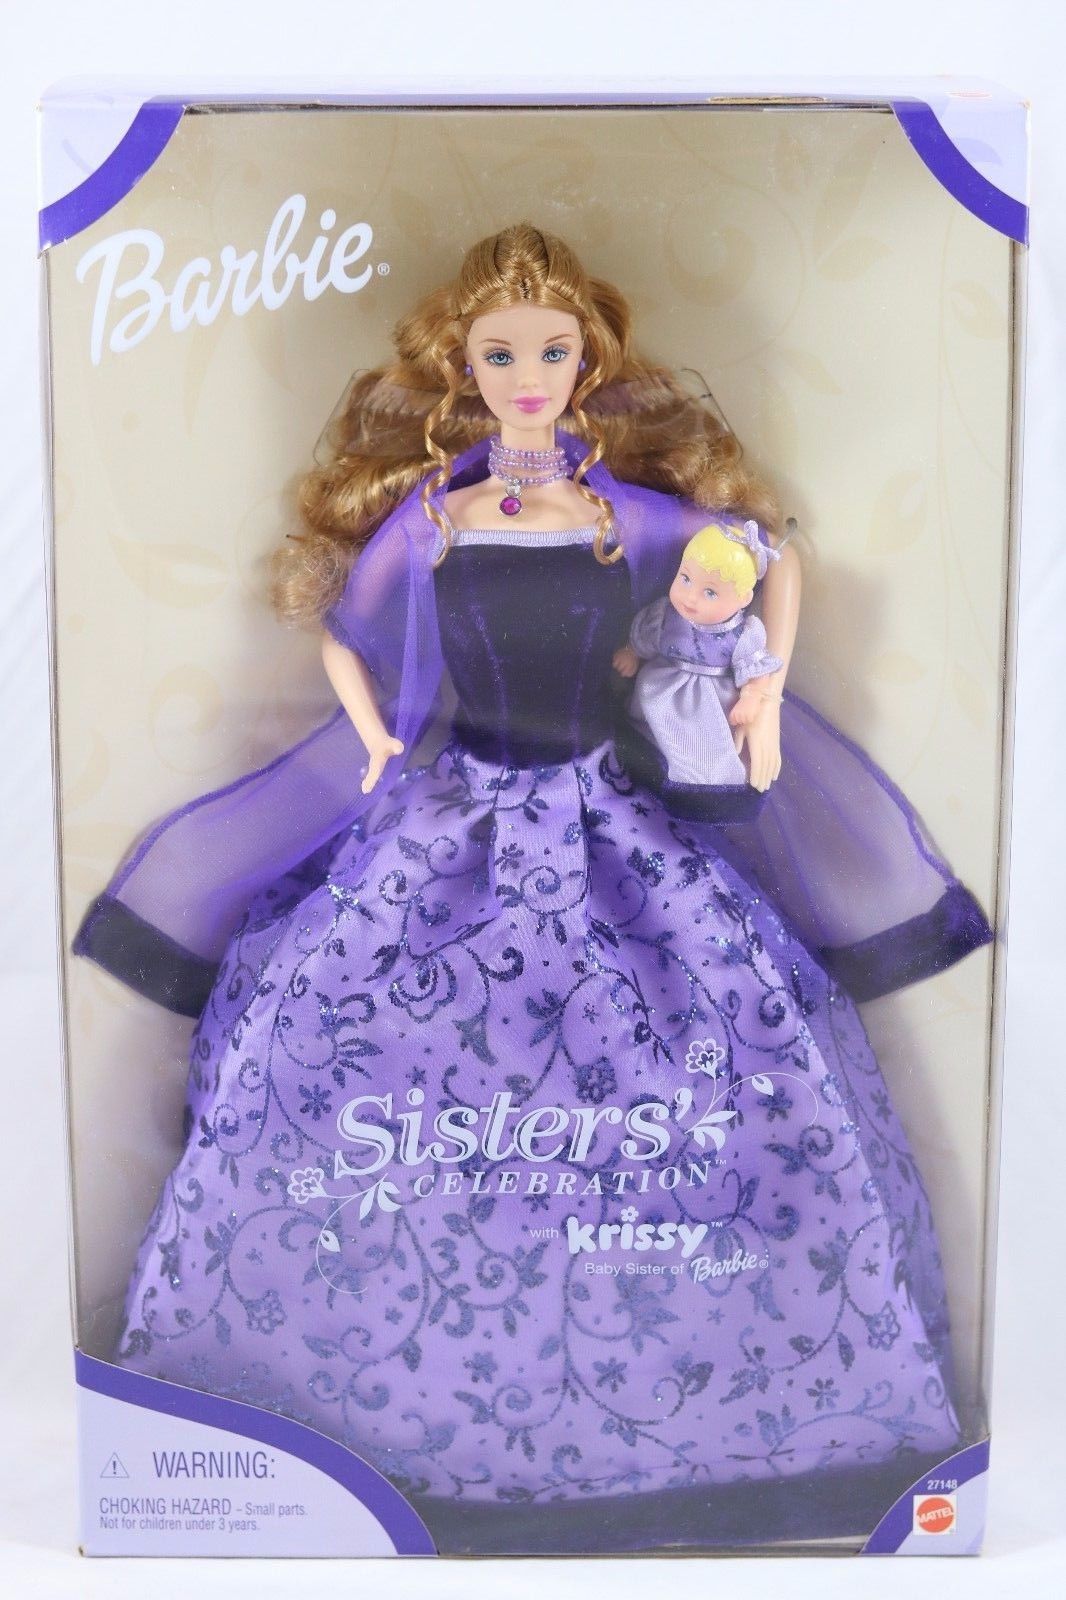 2000_mattel_sisters_celebration_wkrissy_baby_sister_of_barbie.jpg